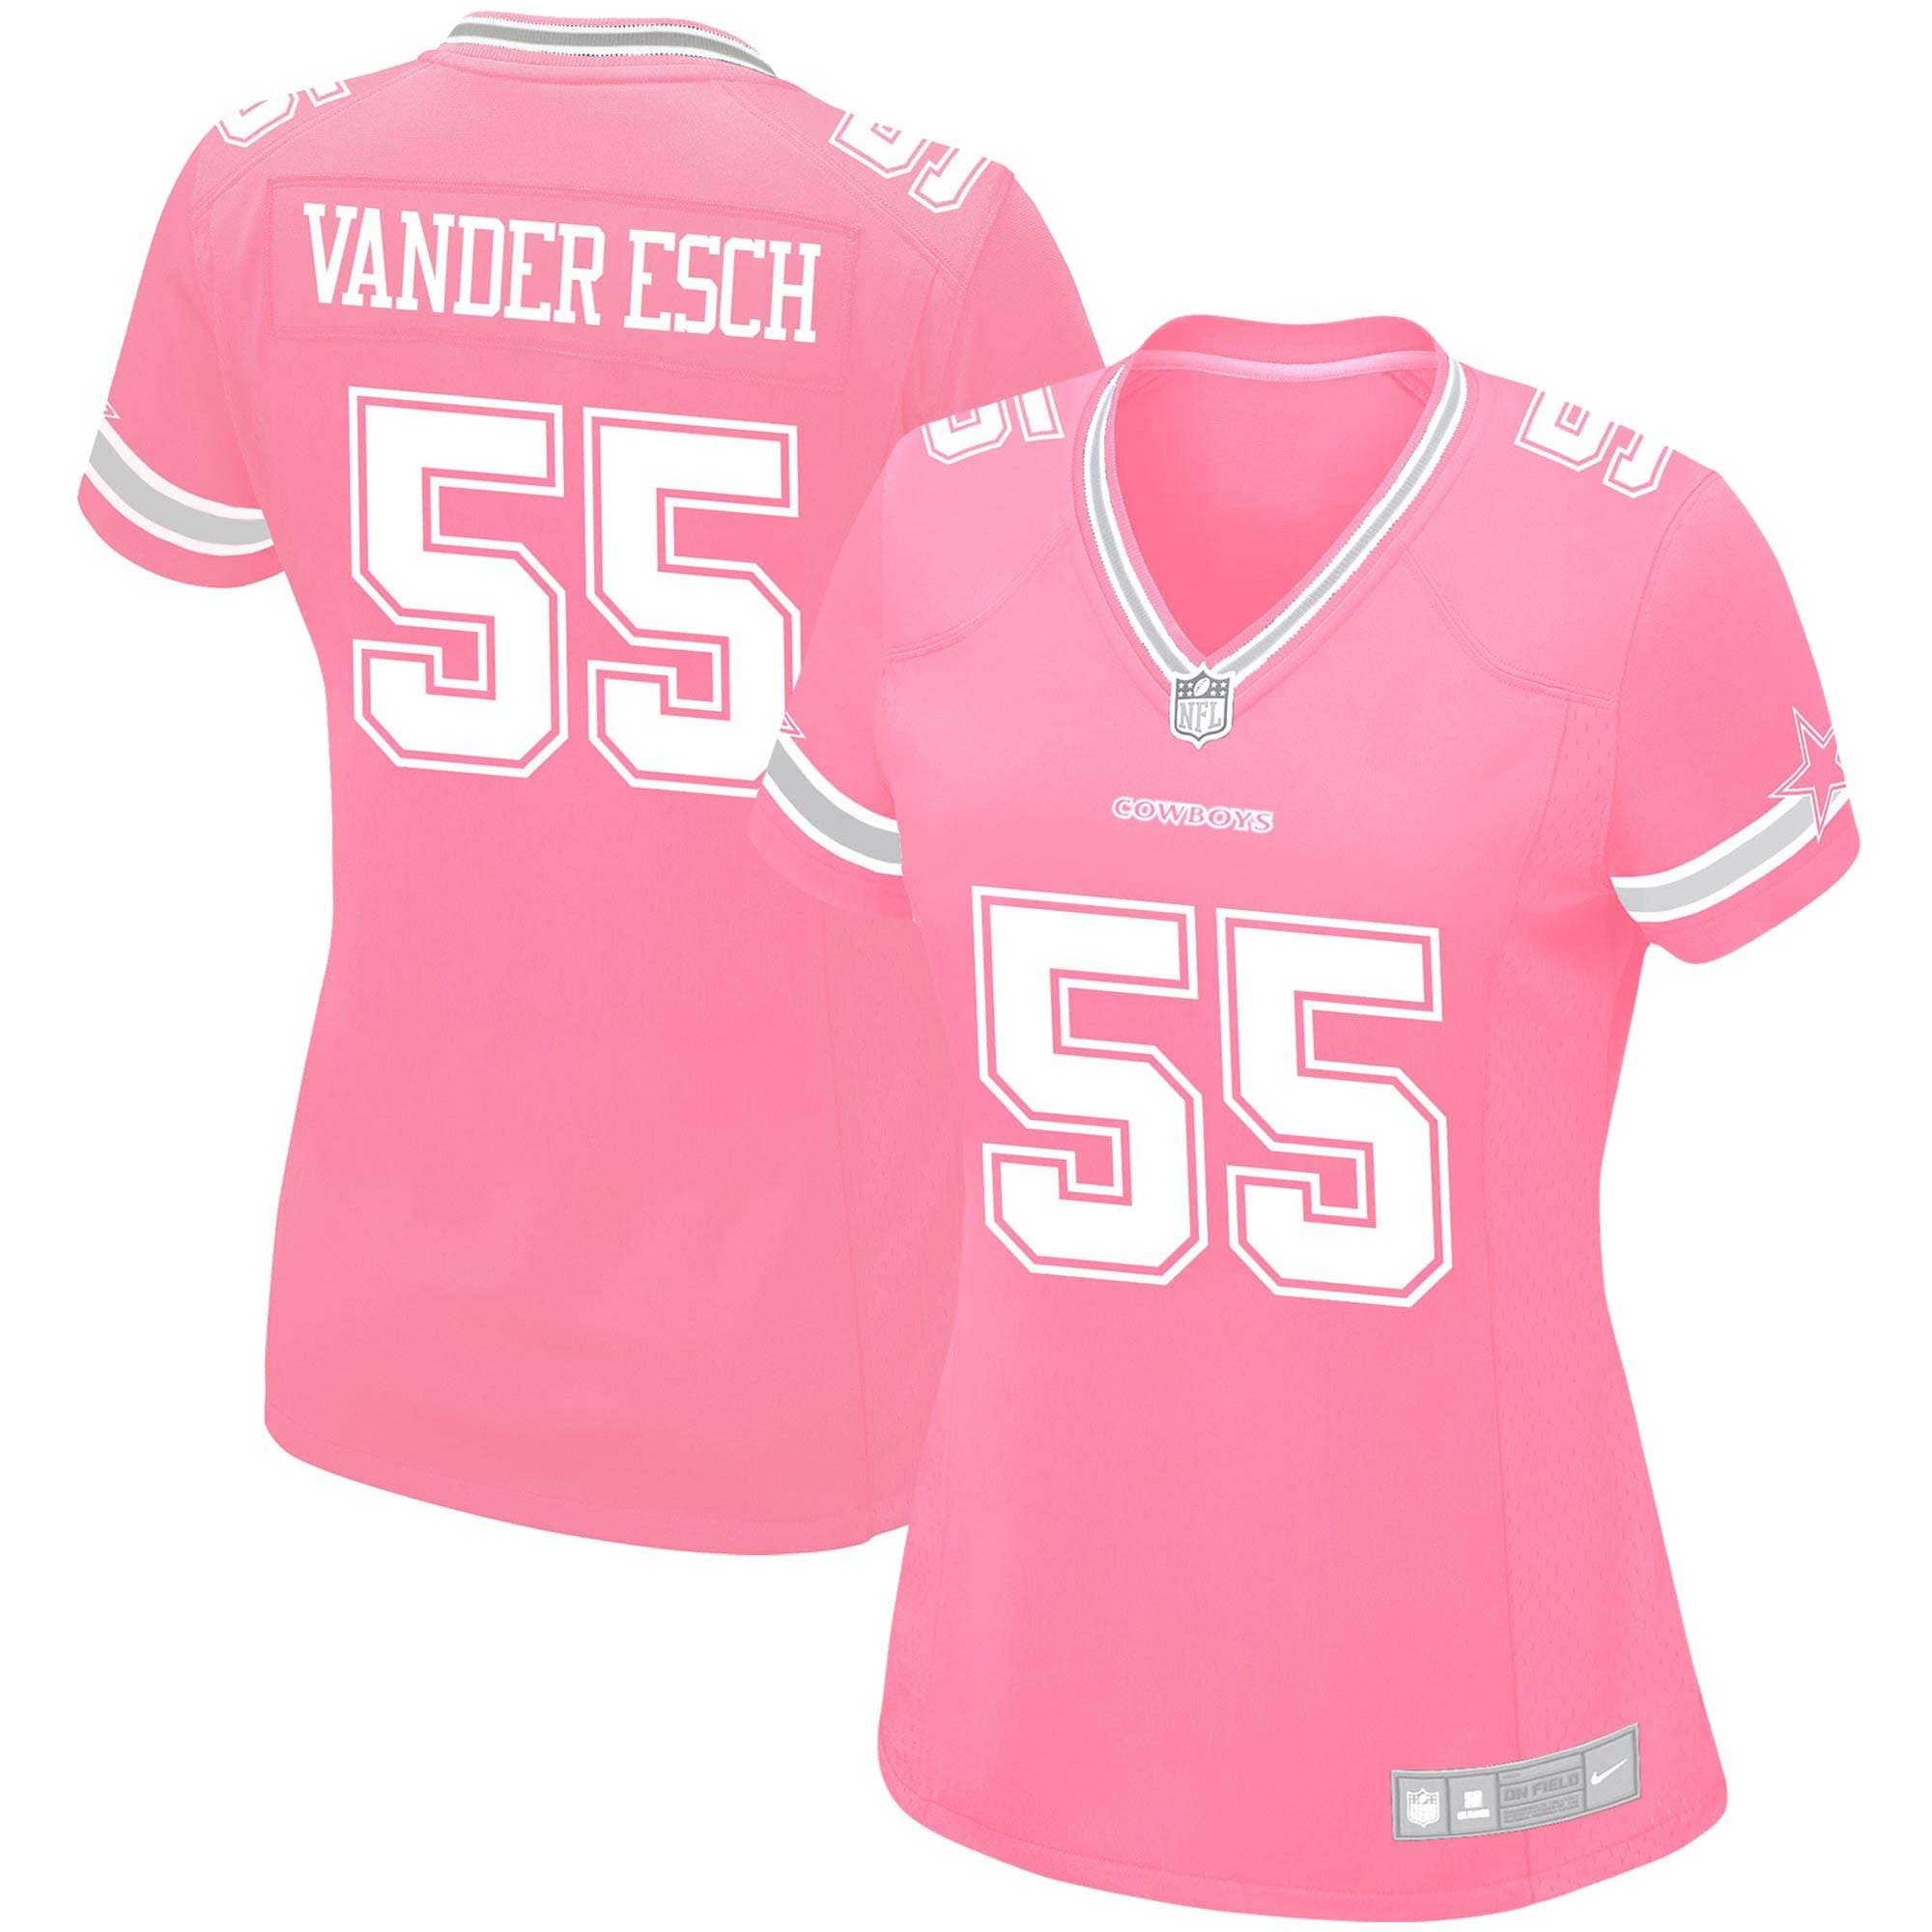 Leighton Vander Esch Dallas Cowboys Nike Women's Game Jersey - Pink - Walmart.com